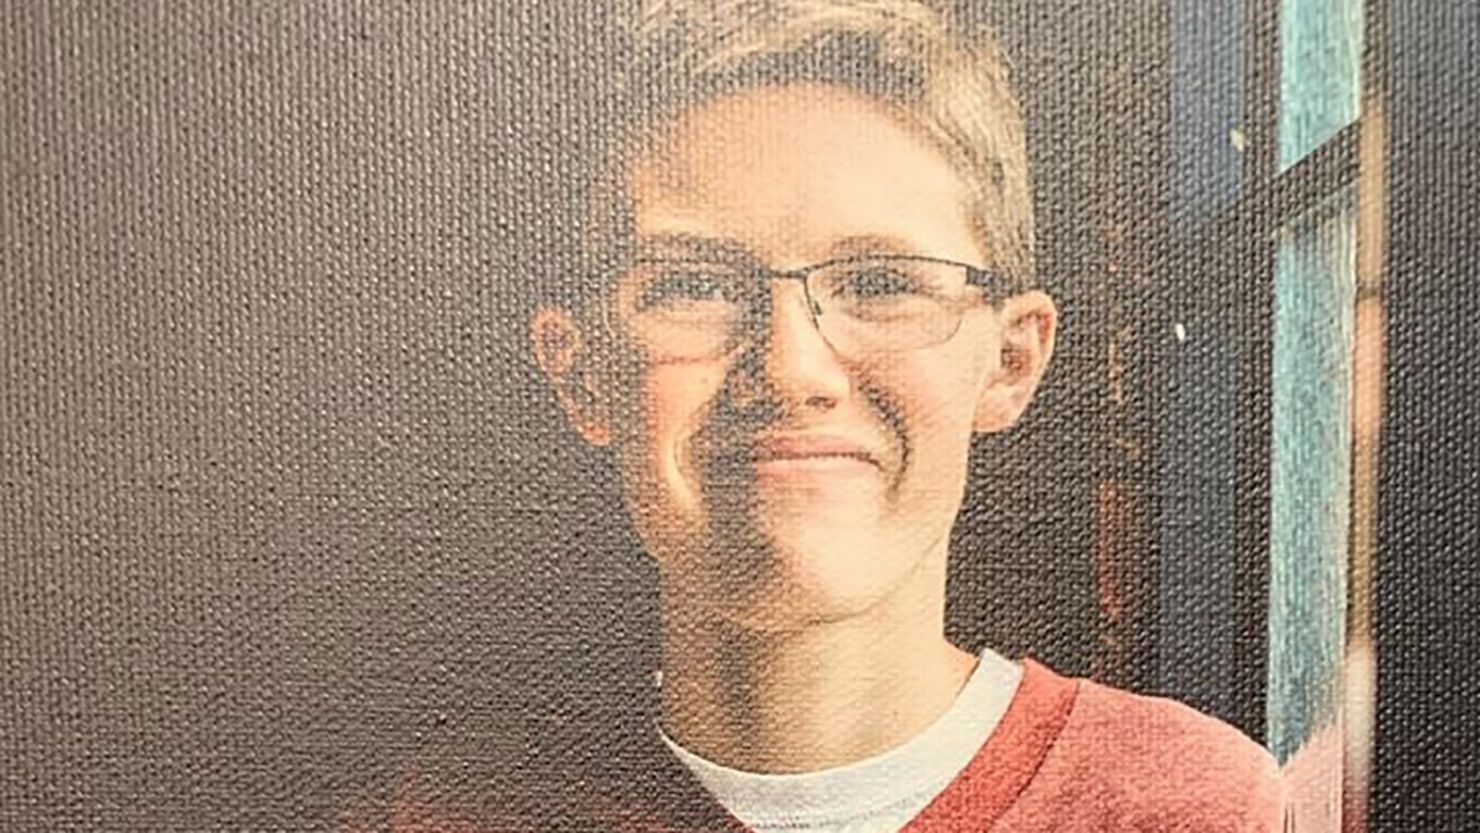 Wyoming teen Joseph "Joey" Peterson was last seen in the Casper area on November 10. 